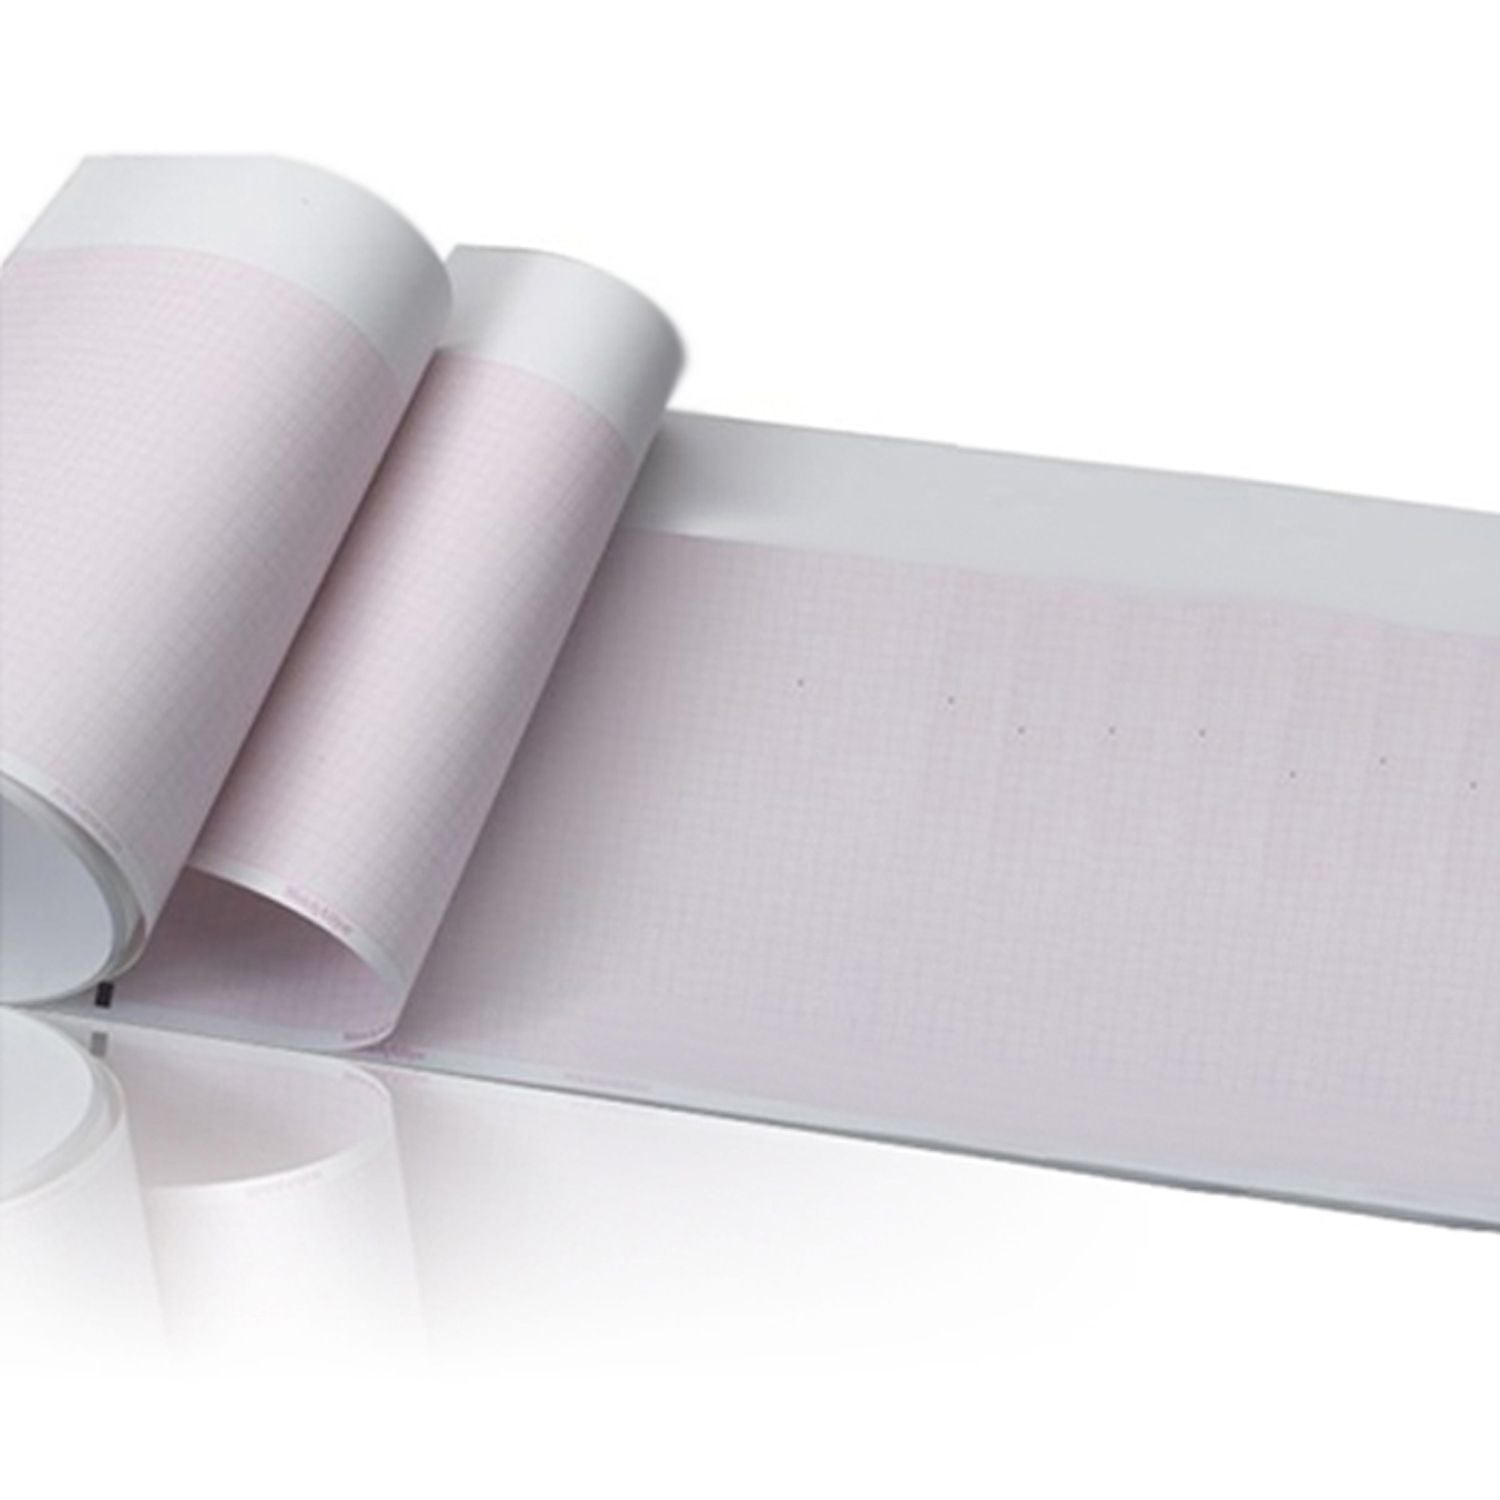 CT3000i Interpretive Z-Fold Paper | Single Pack (400 Sheets)